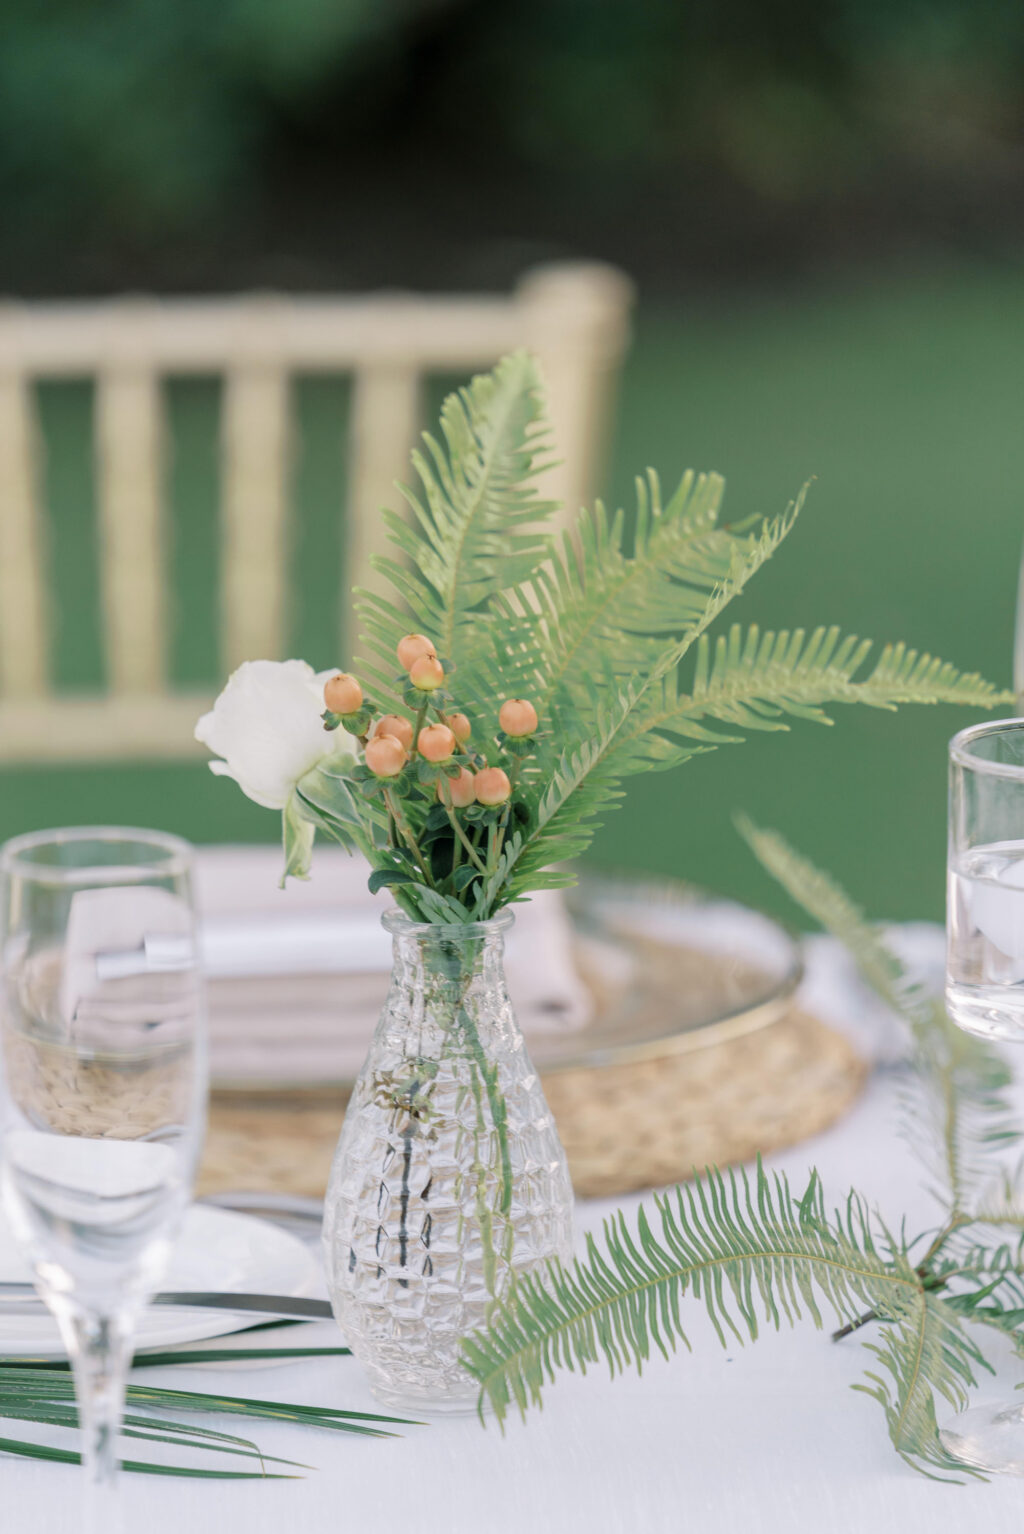 Orange Hypernicum Berry with Fern Wedding Reception Table Centerpiece Ideas | Sarasota Florist Beneva Weddings and Events